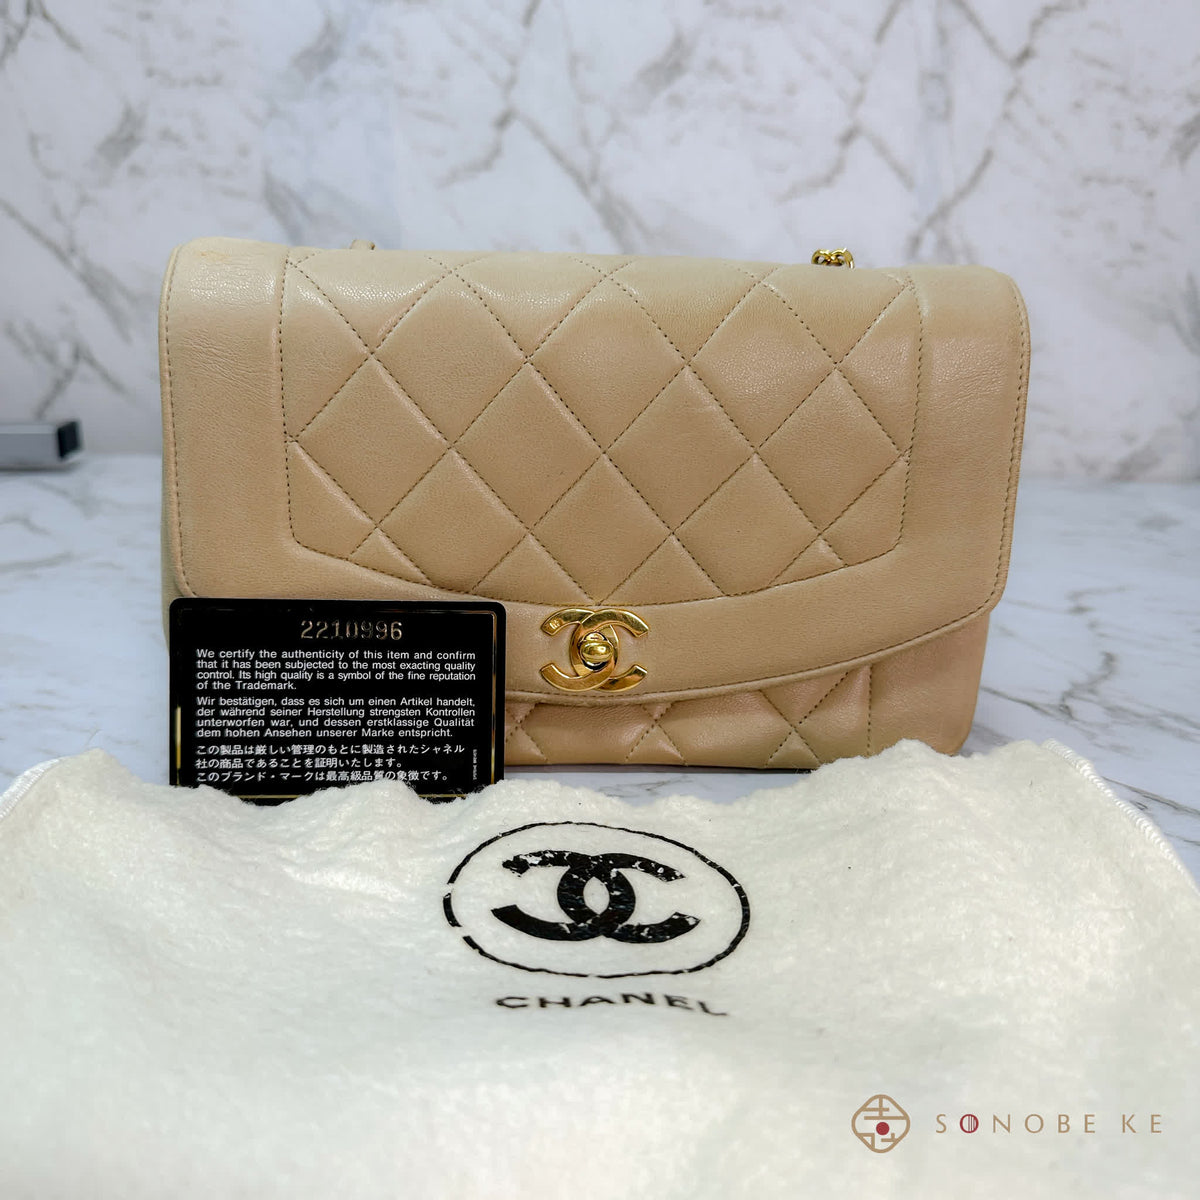 CHANEL, Bags, Chanel Quilted Matelasse Cc Logo Lambskin Chain Shoulder  Bag Black 2n725